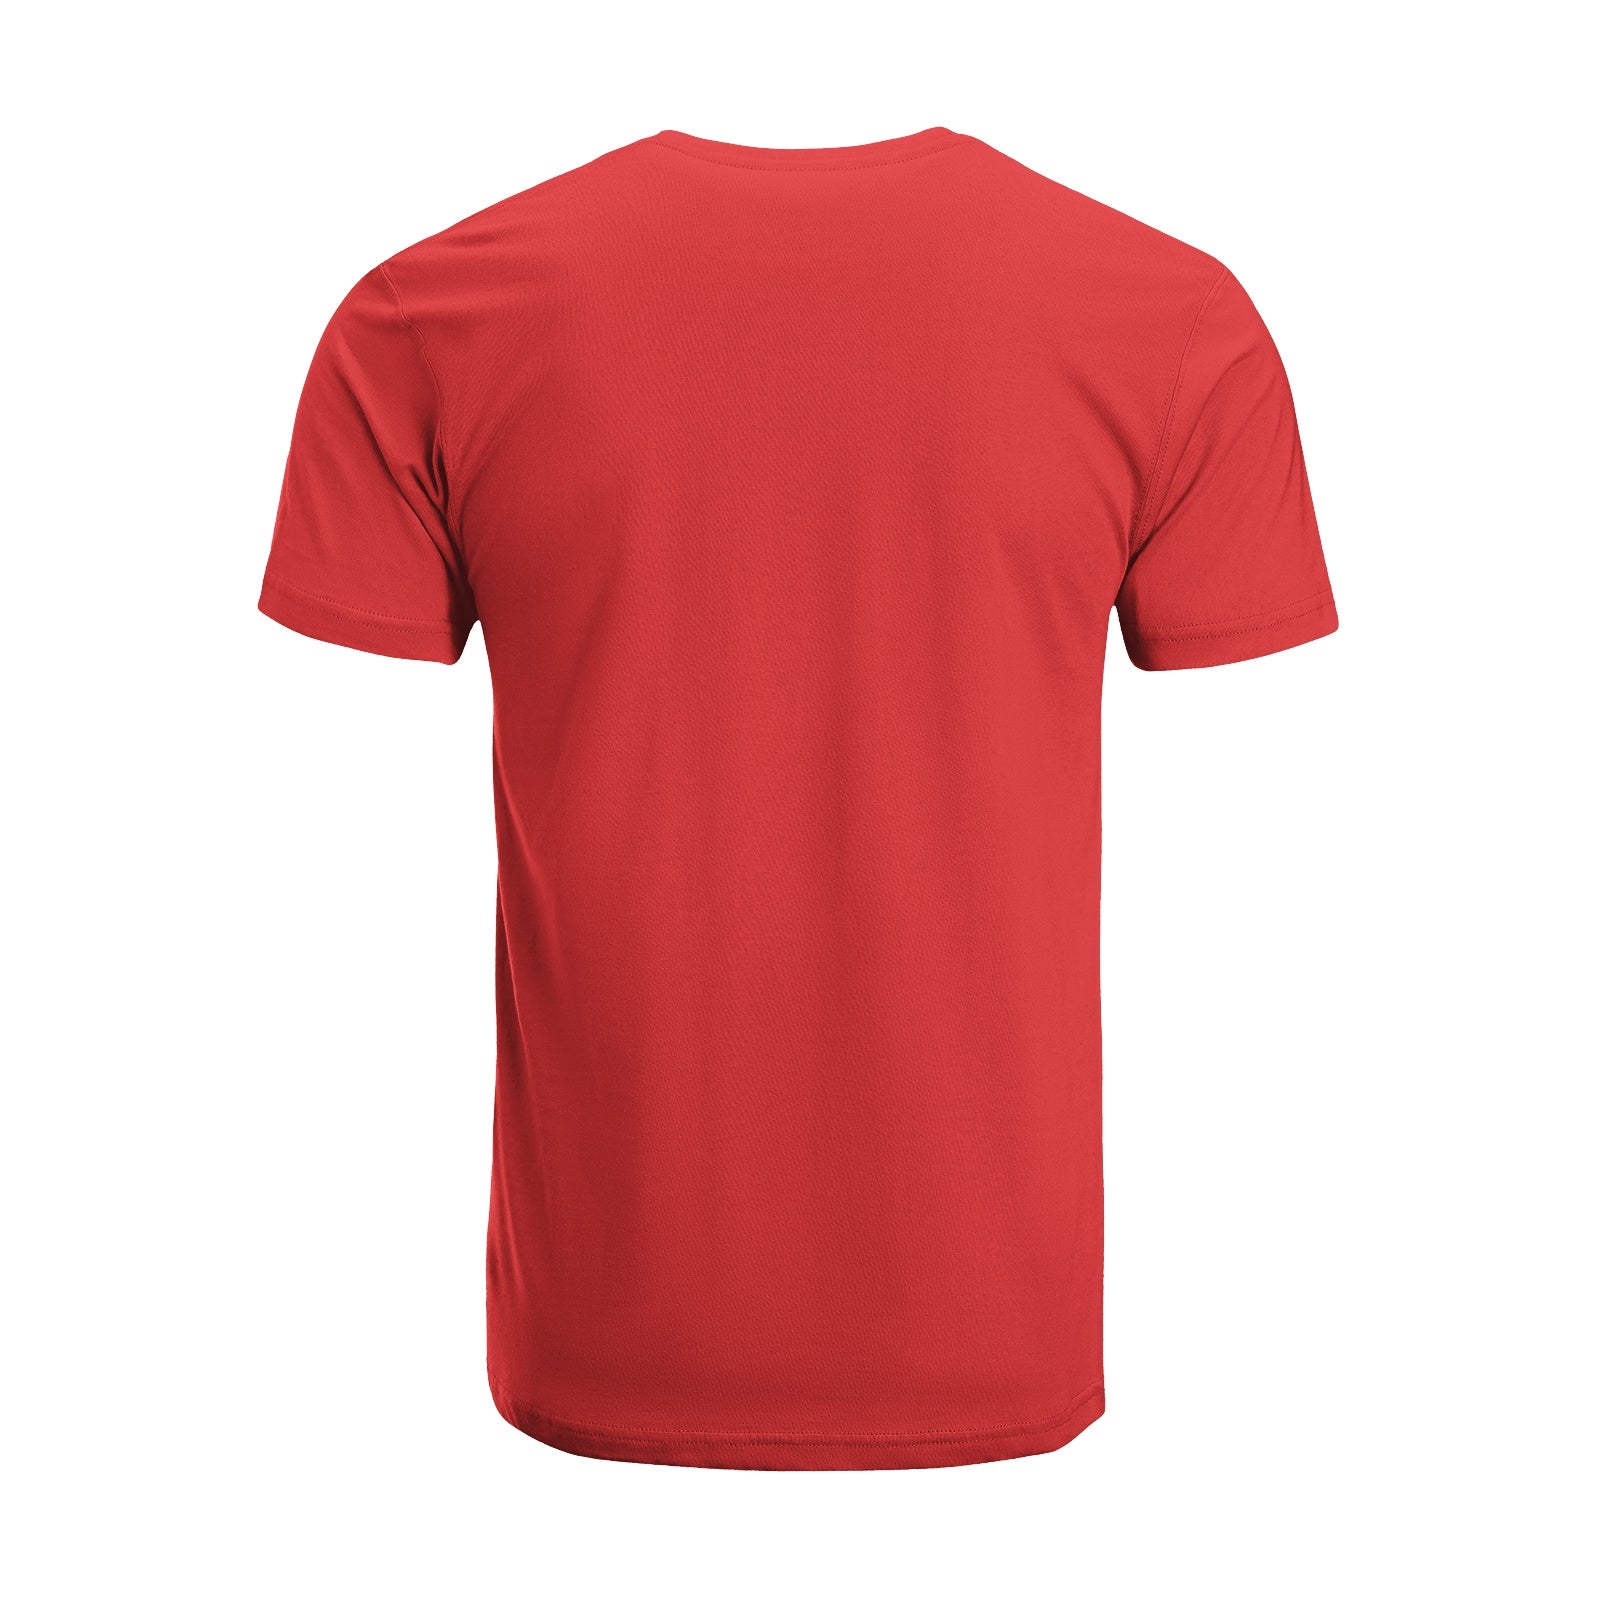 Unisex Short Sleeve Crew Neck Cotton Jersey T-Shirt CAT 49 - Tara-Outfits.com